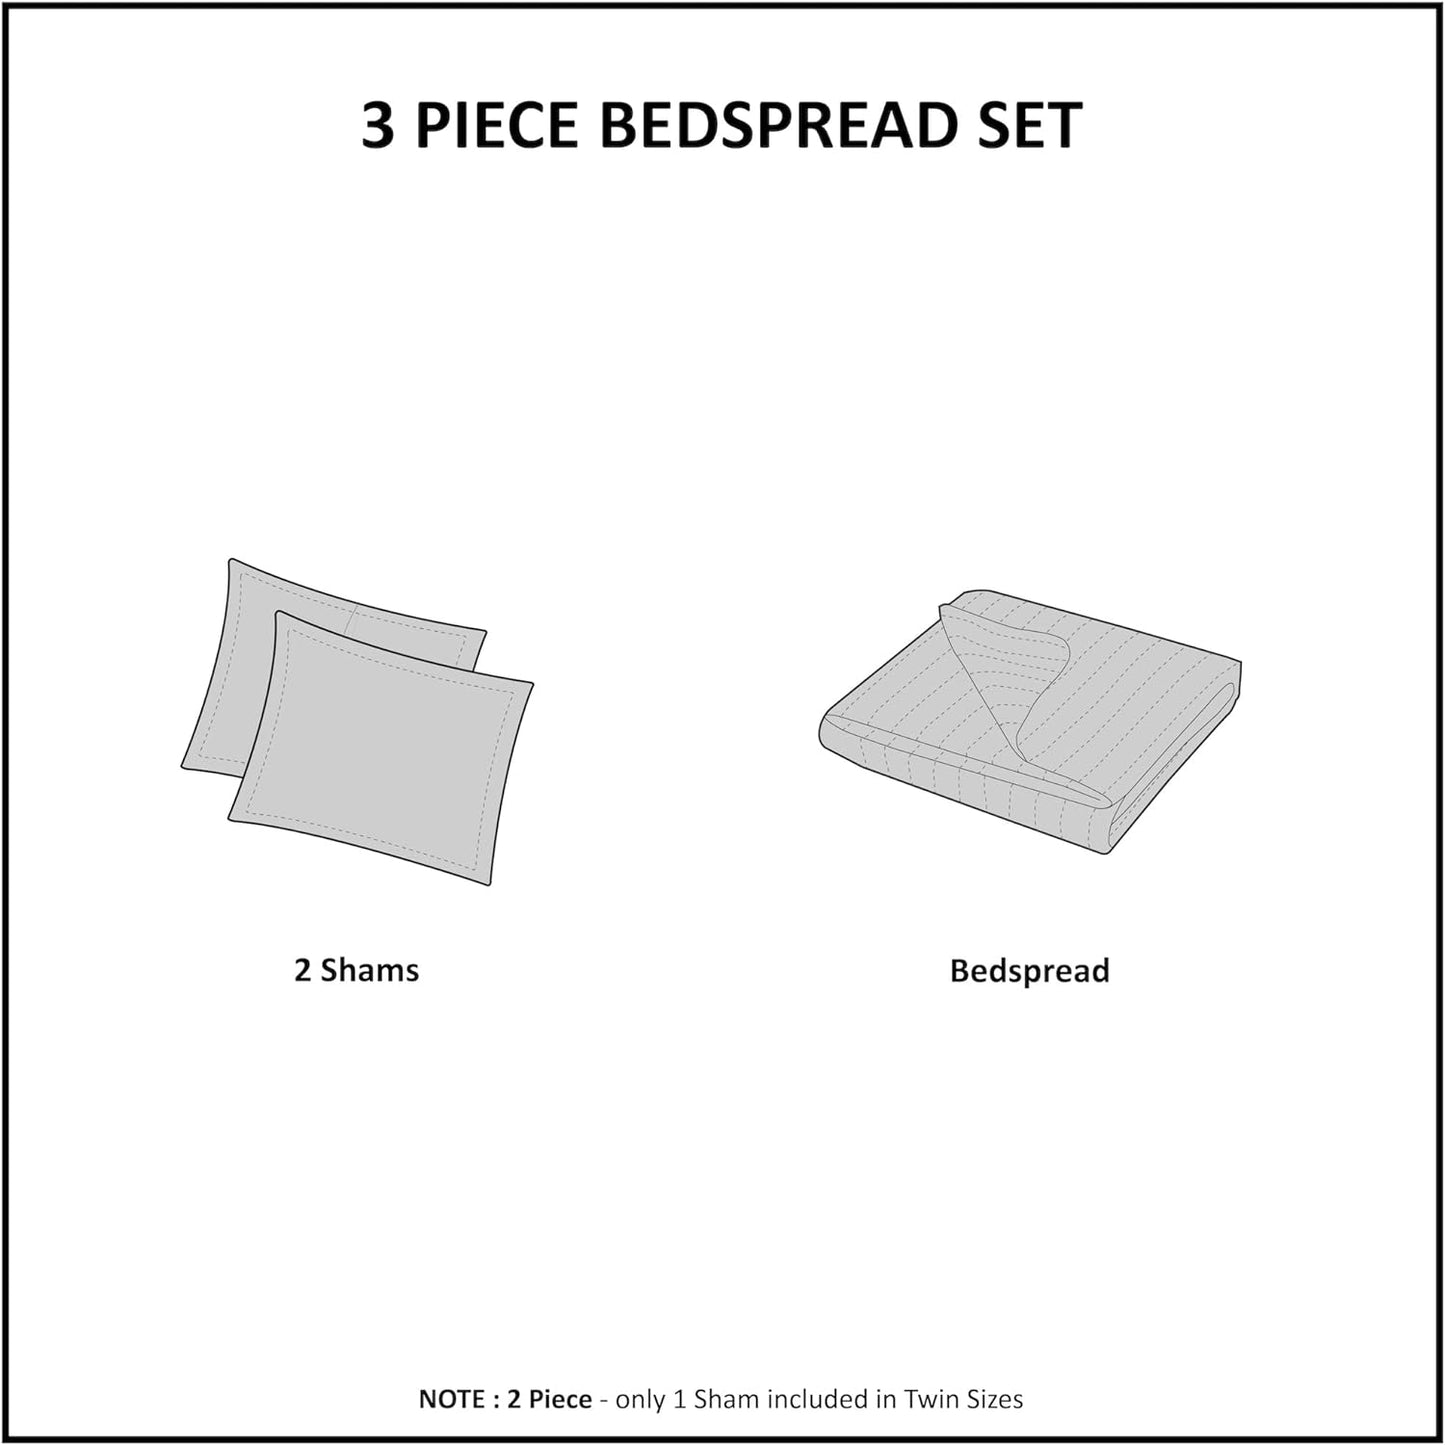 Madison Park Mansfield Reversible Oversized 3-piece Solid Texture Bedspread Quilt Set (QUEEN)